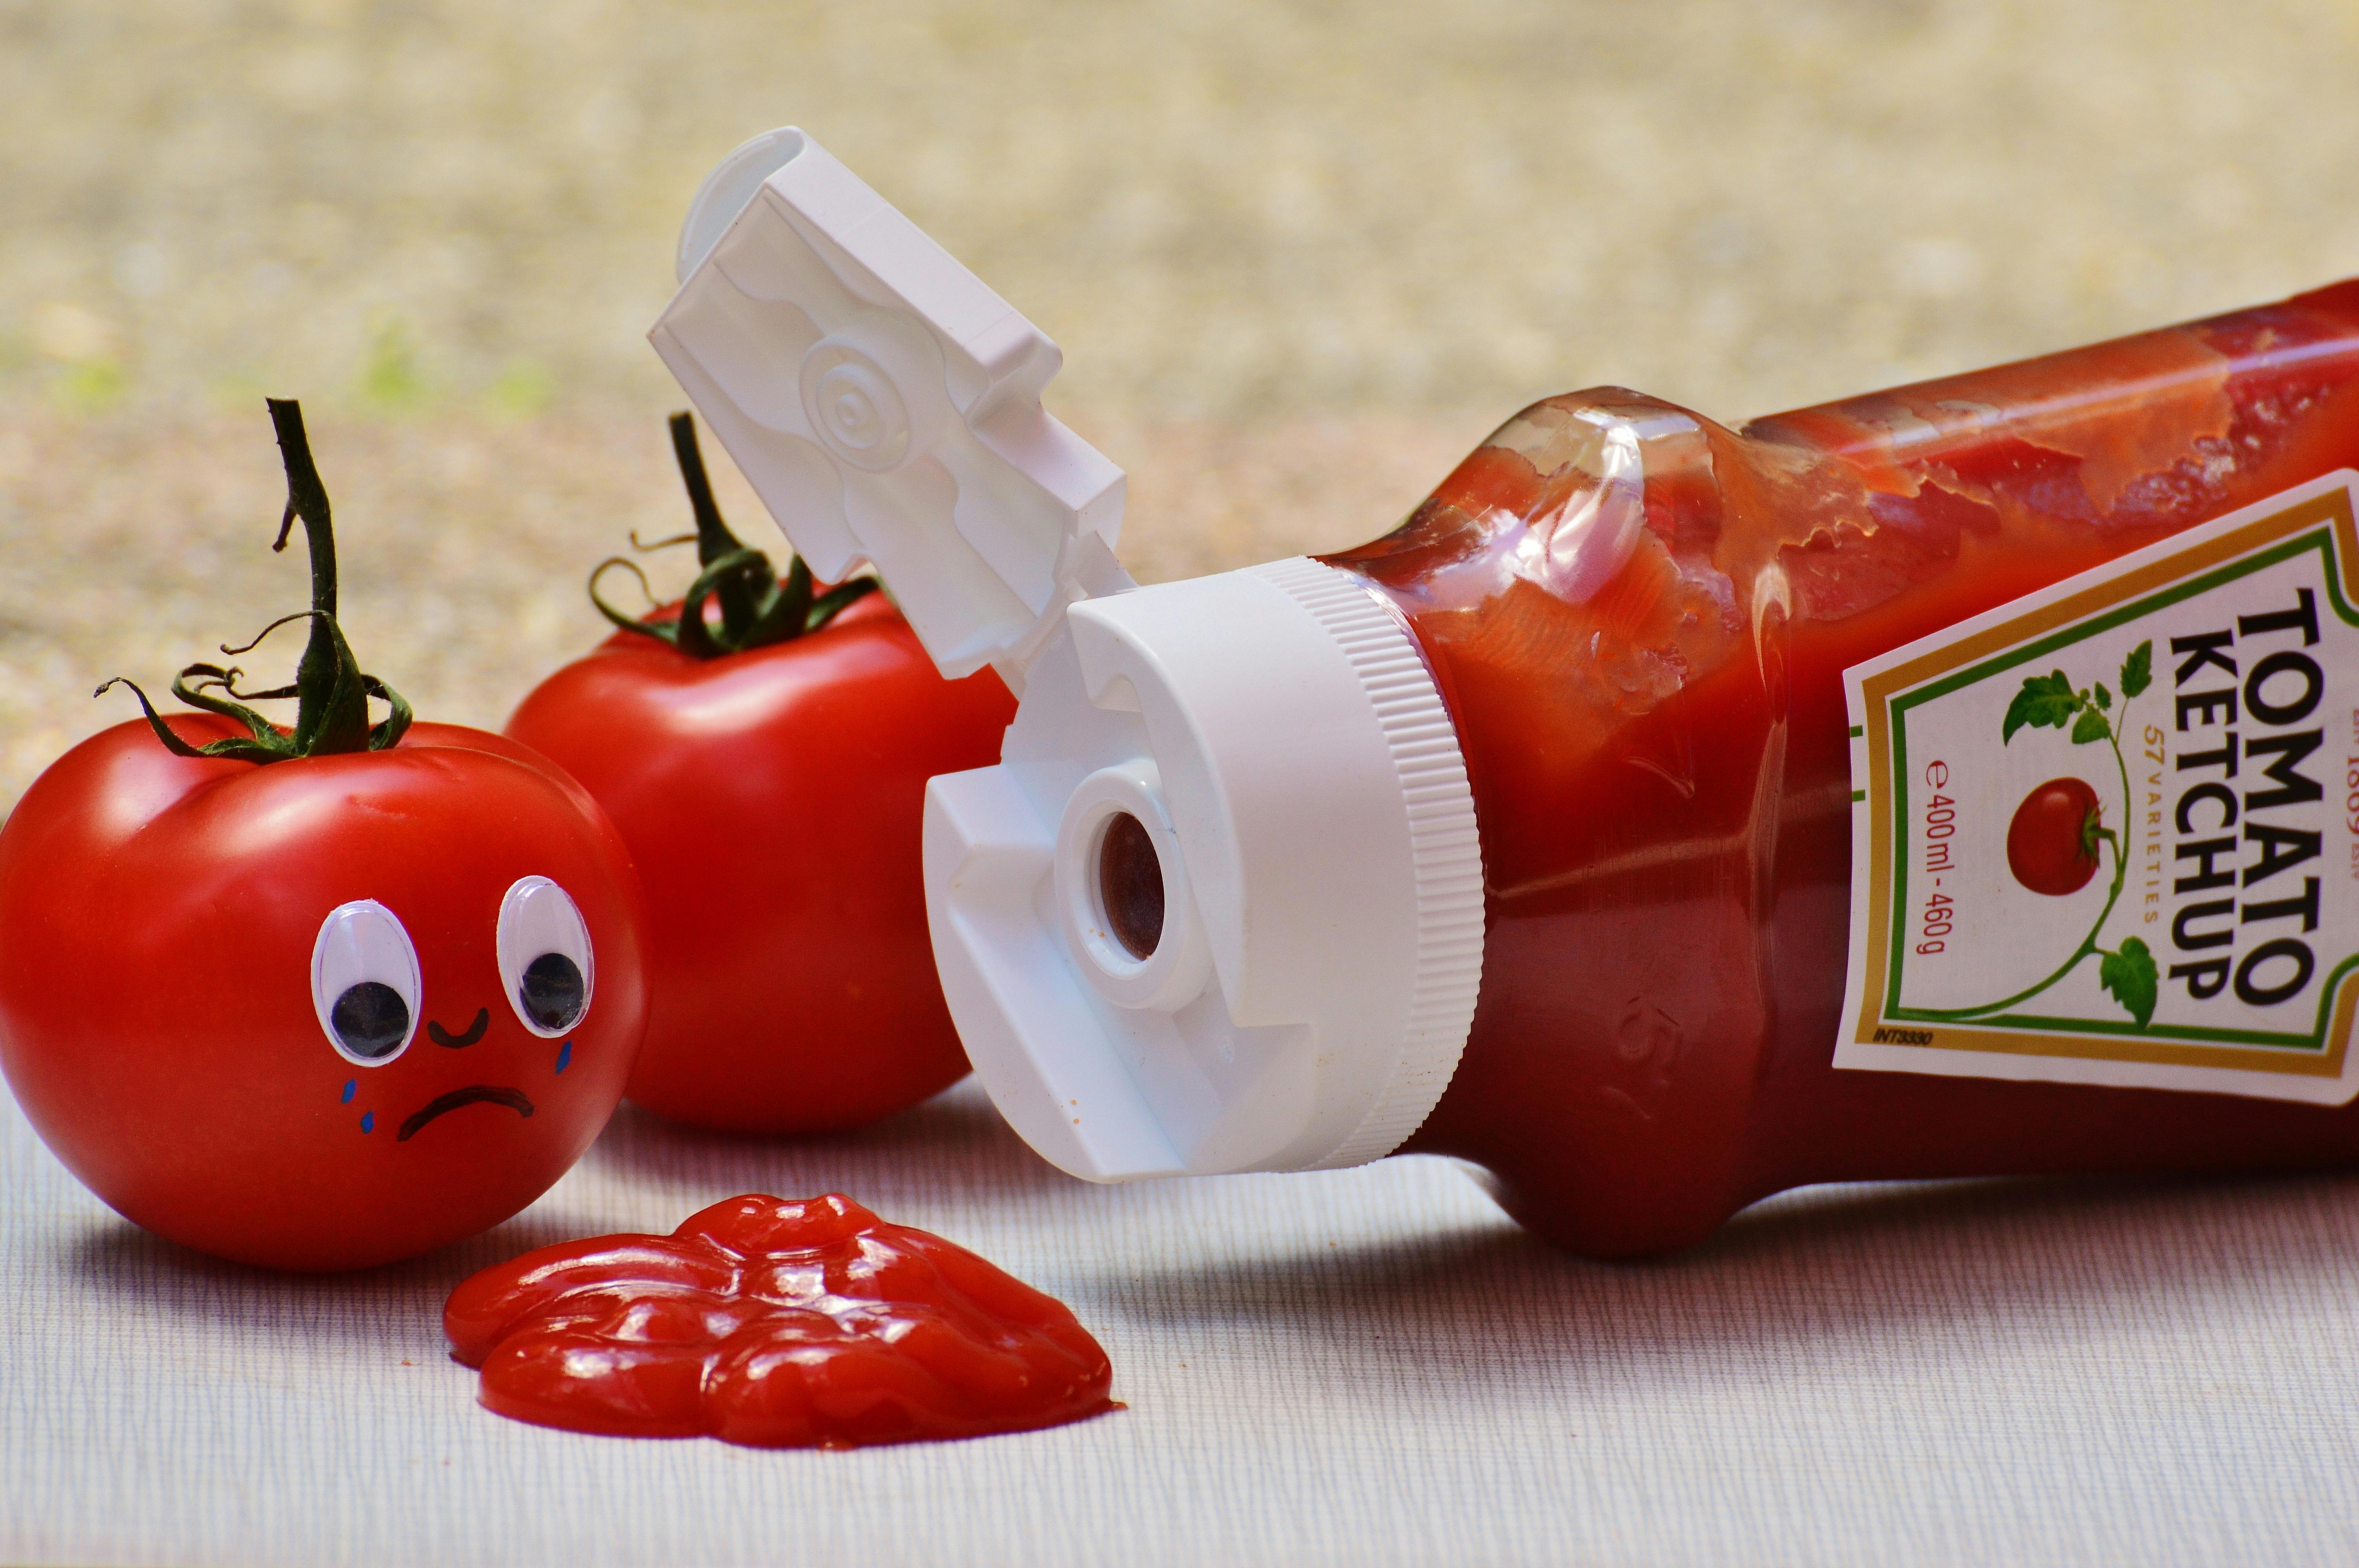 Kostenloses Foto zum Thema: ketchup, soße, tomaten